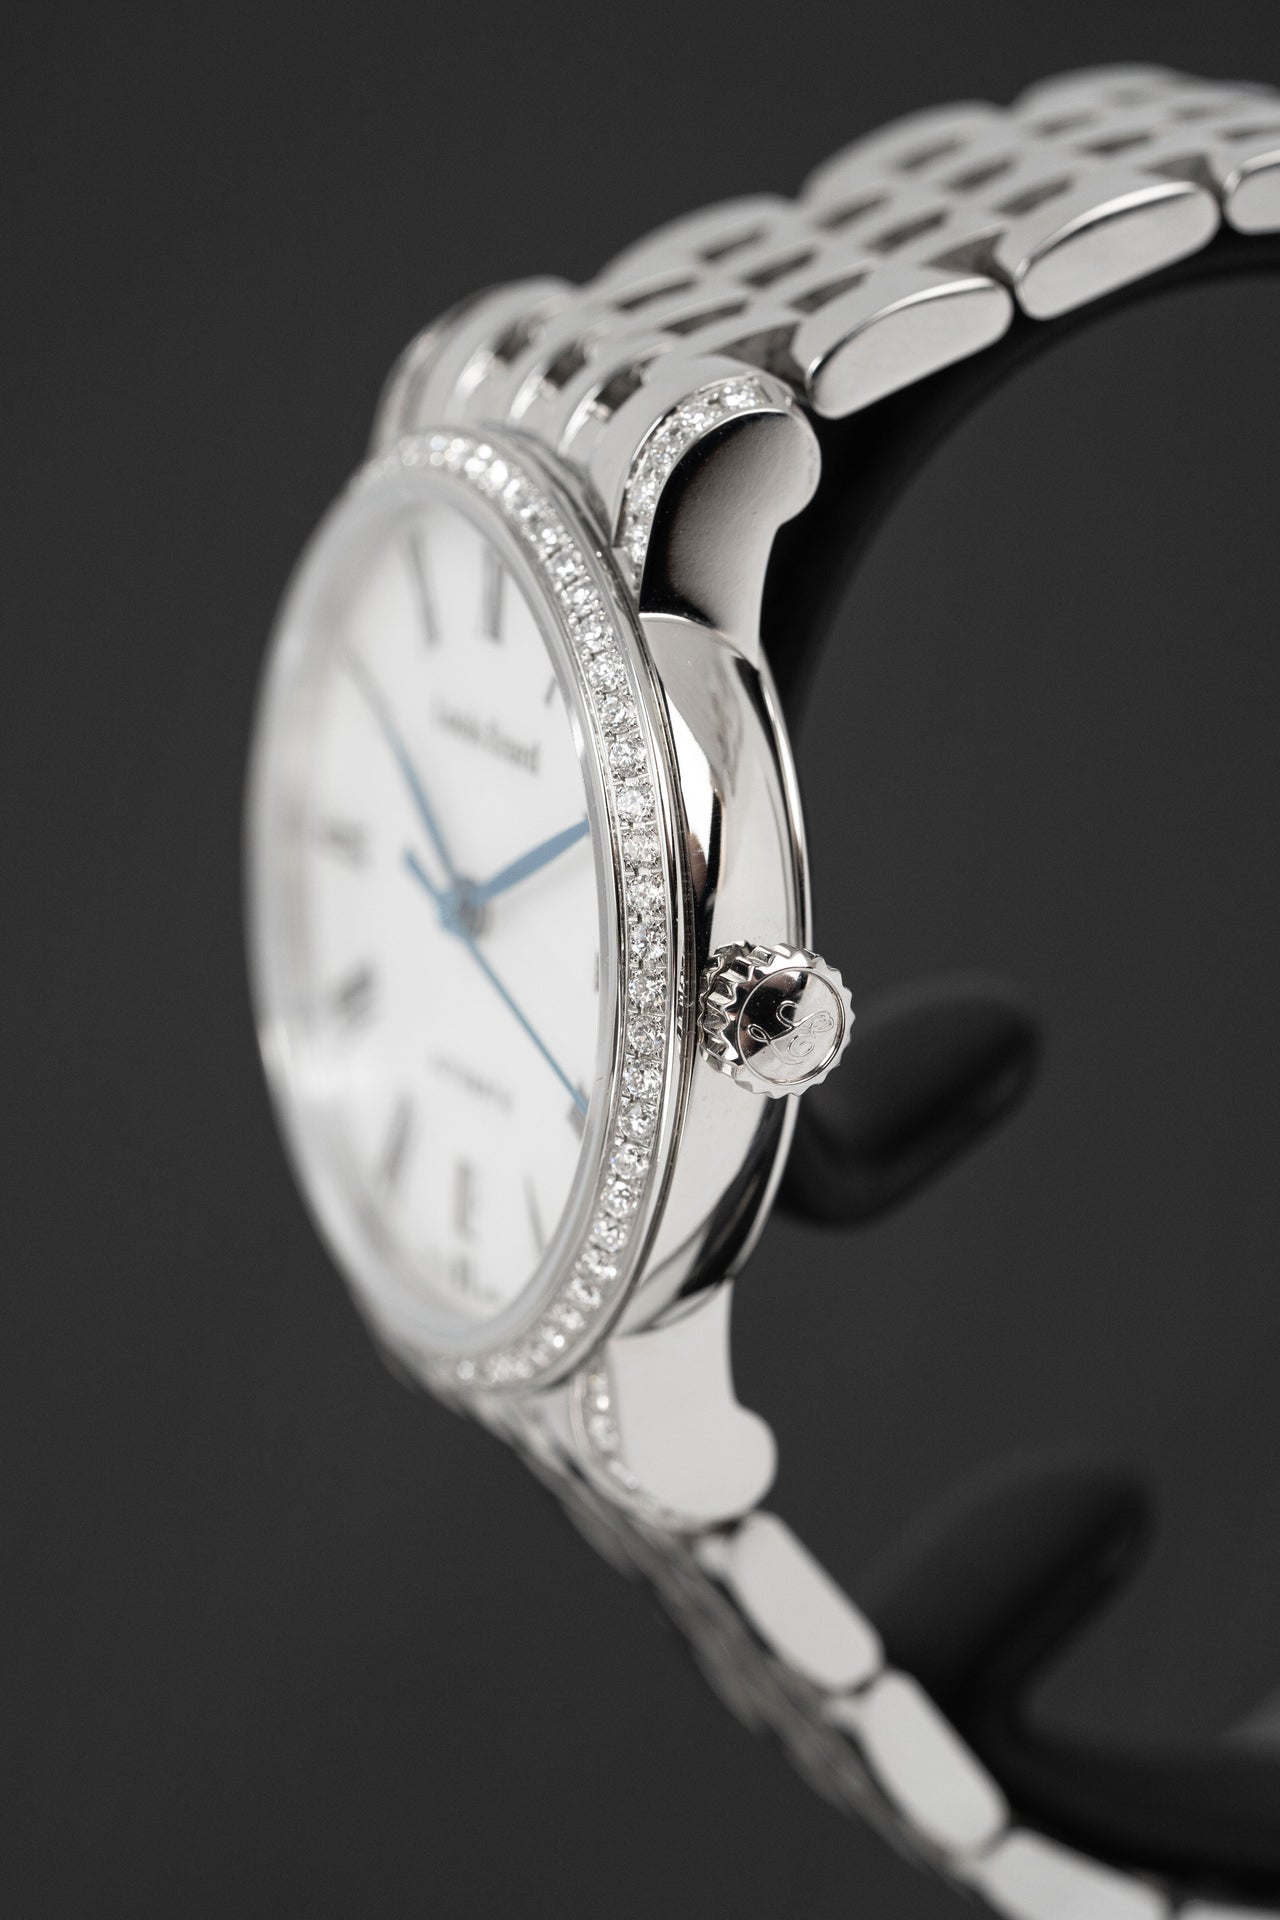 Louis Erard Watch Ladies Automatic Excellance Diamond White 92602SE01.